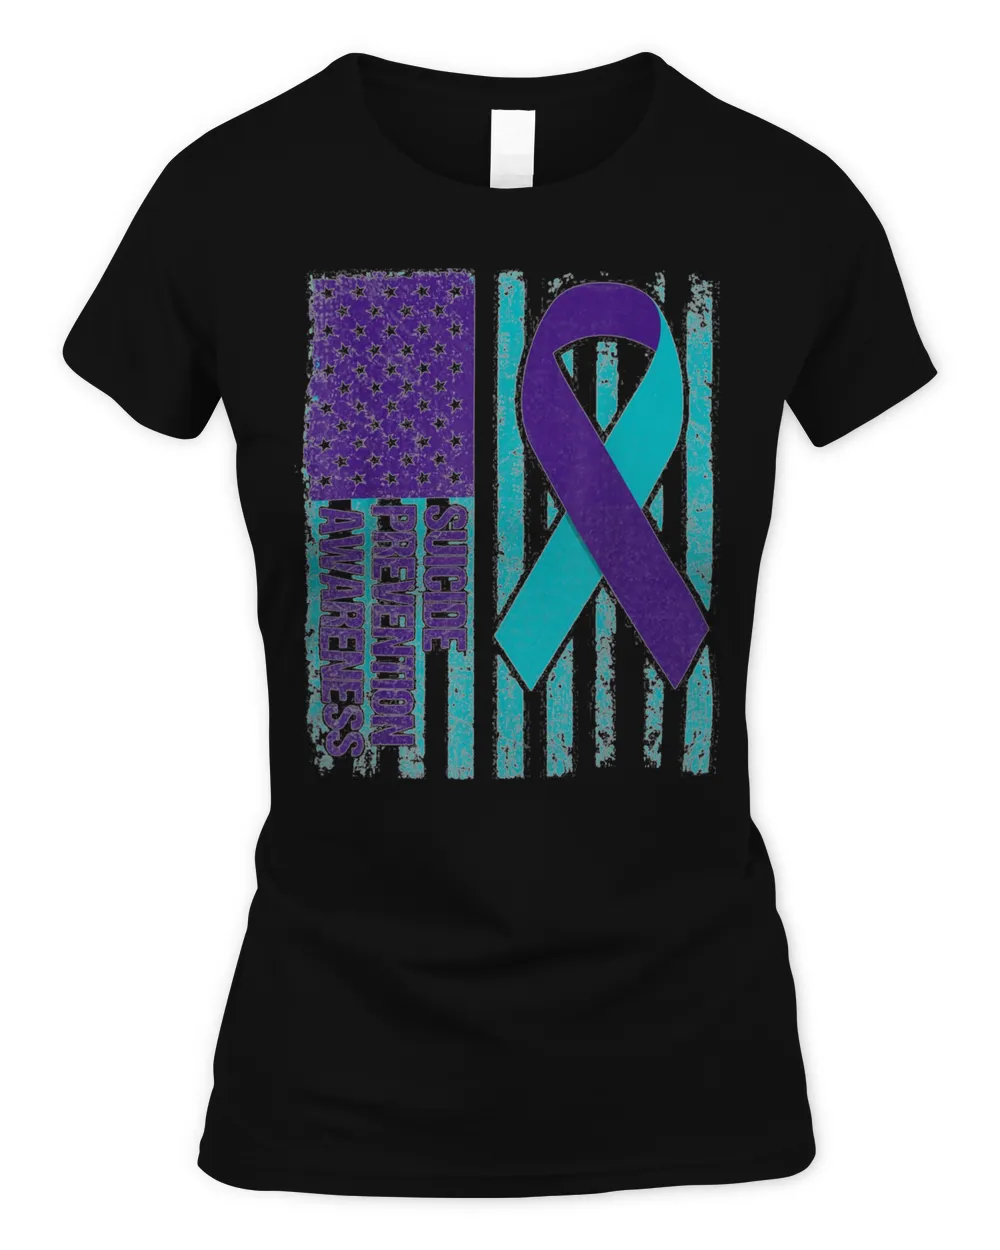 Suicide Prevention Awareness Teal Purple Flag Ribbon Shirt